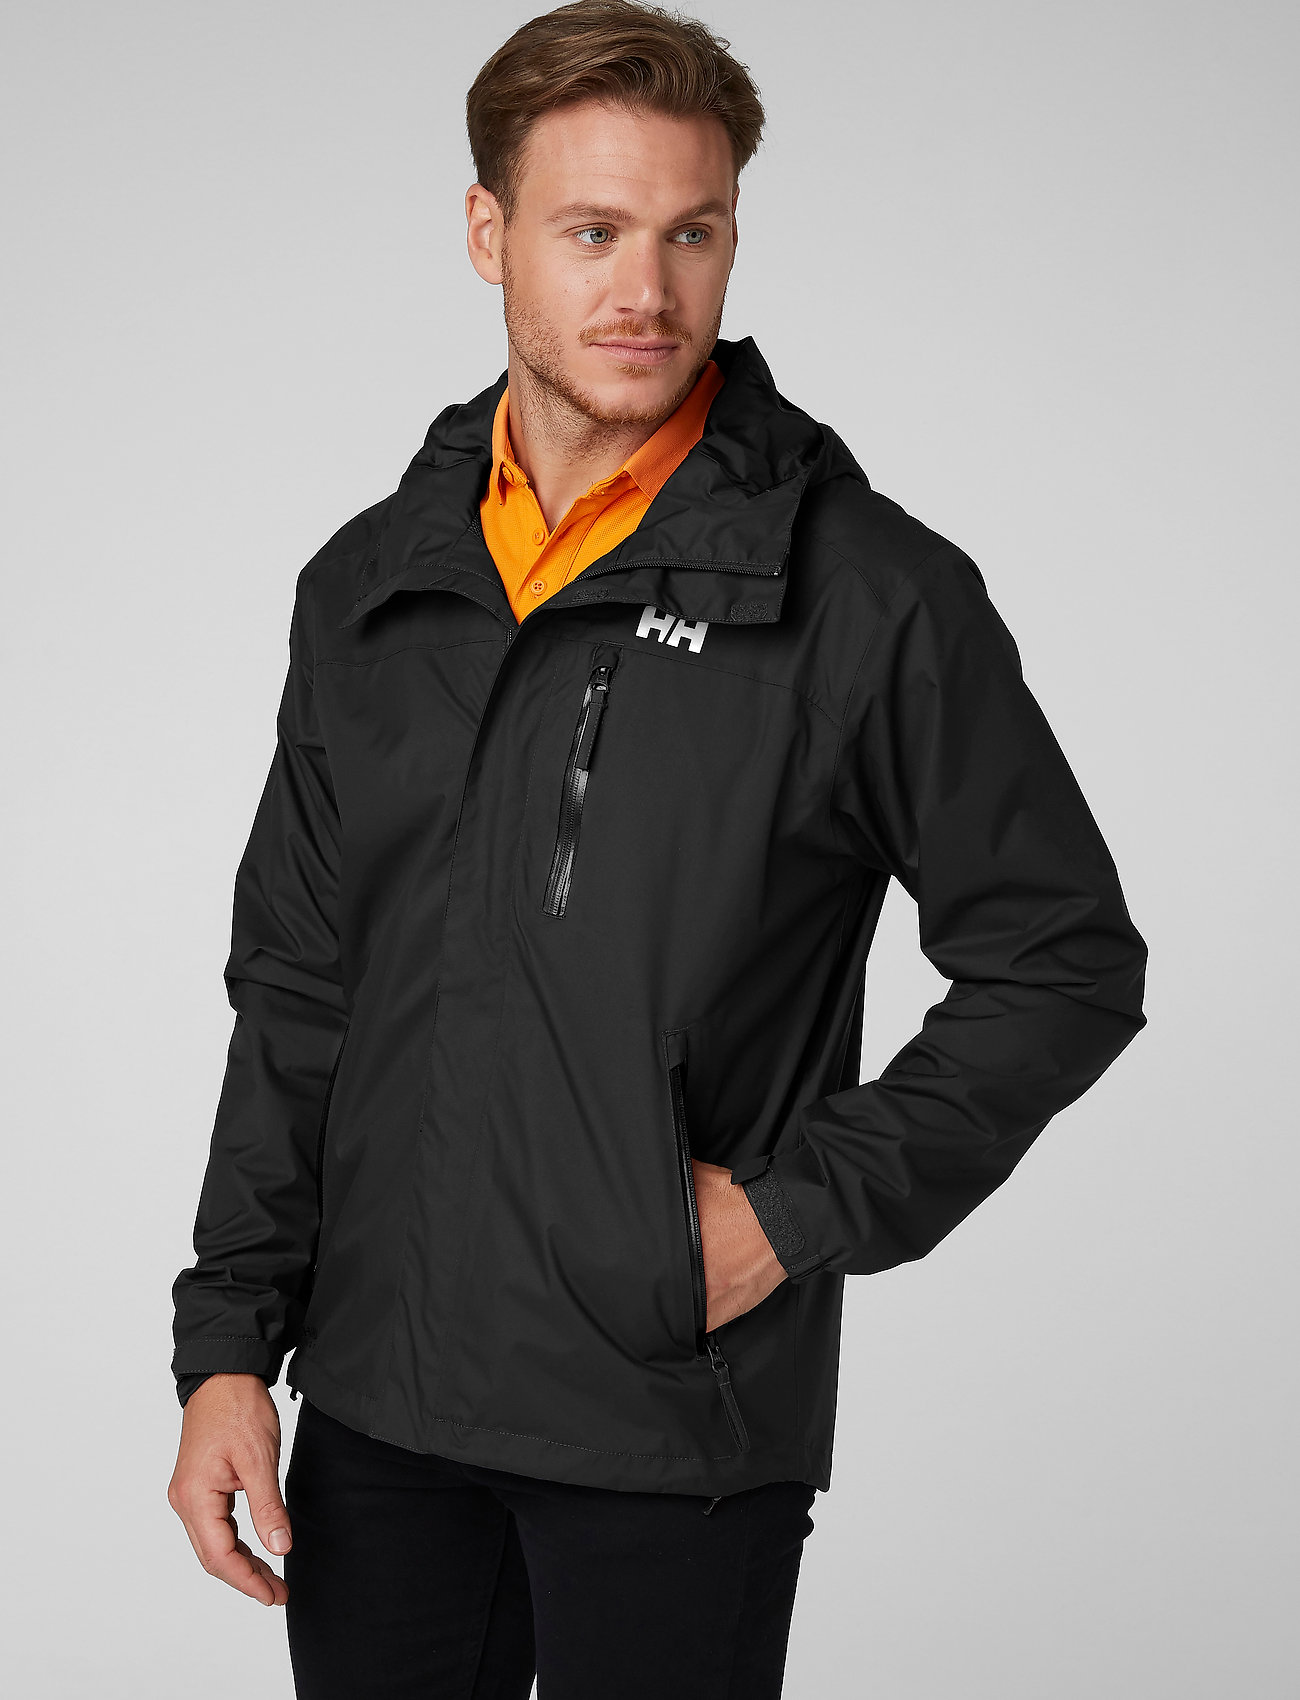 Helly Hansen Vancouver Jacket - Sports jackets | Boozt.com